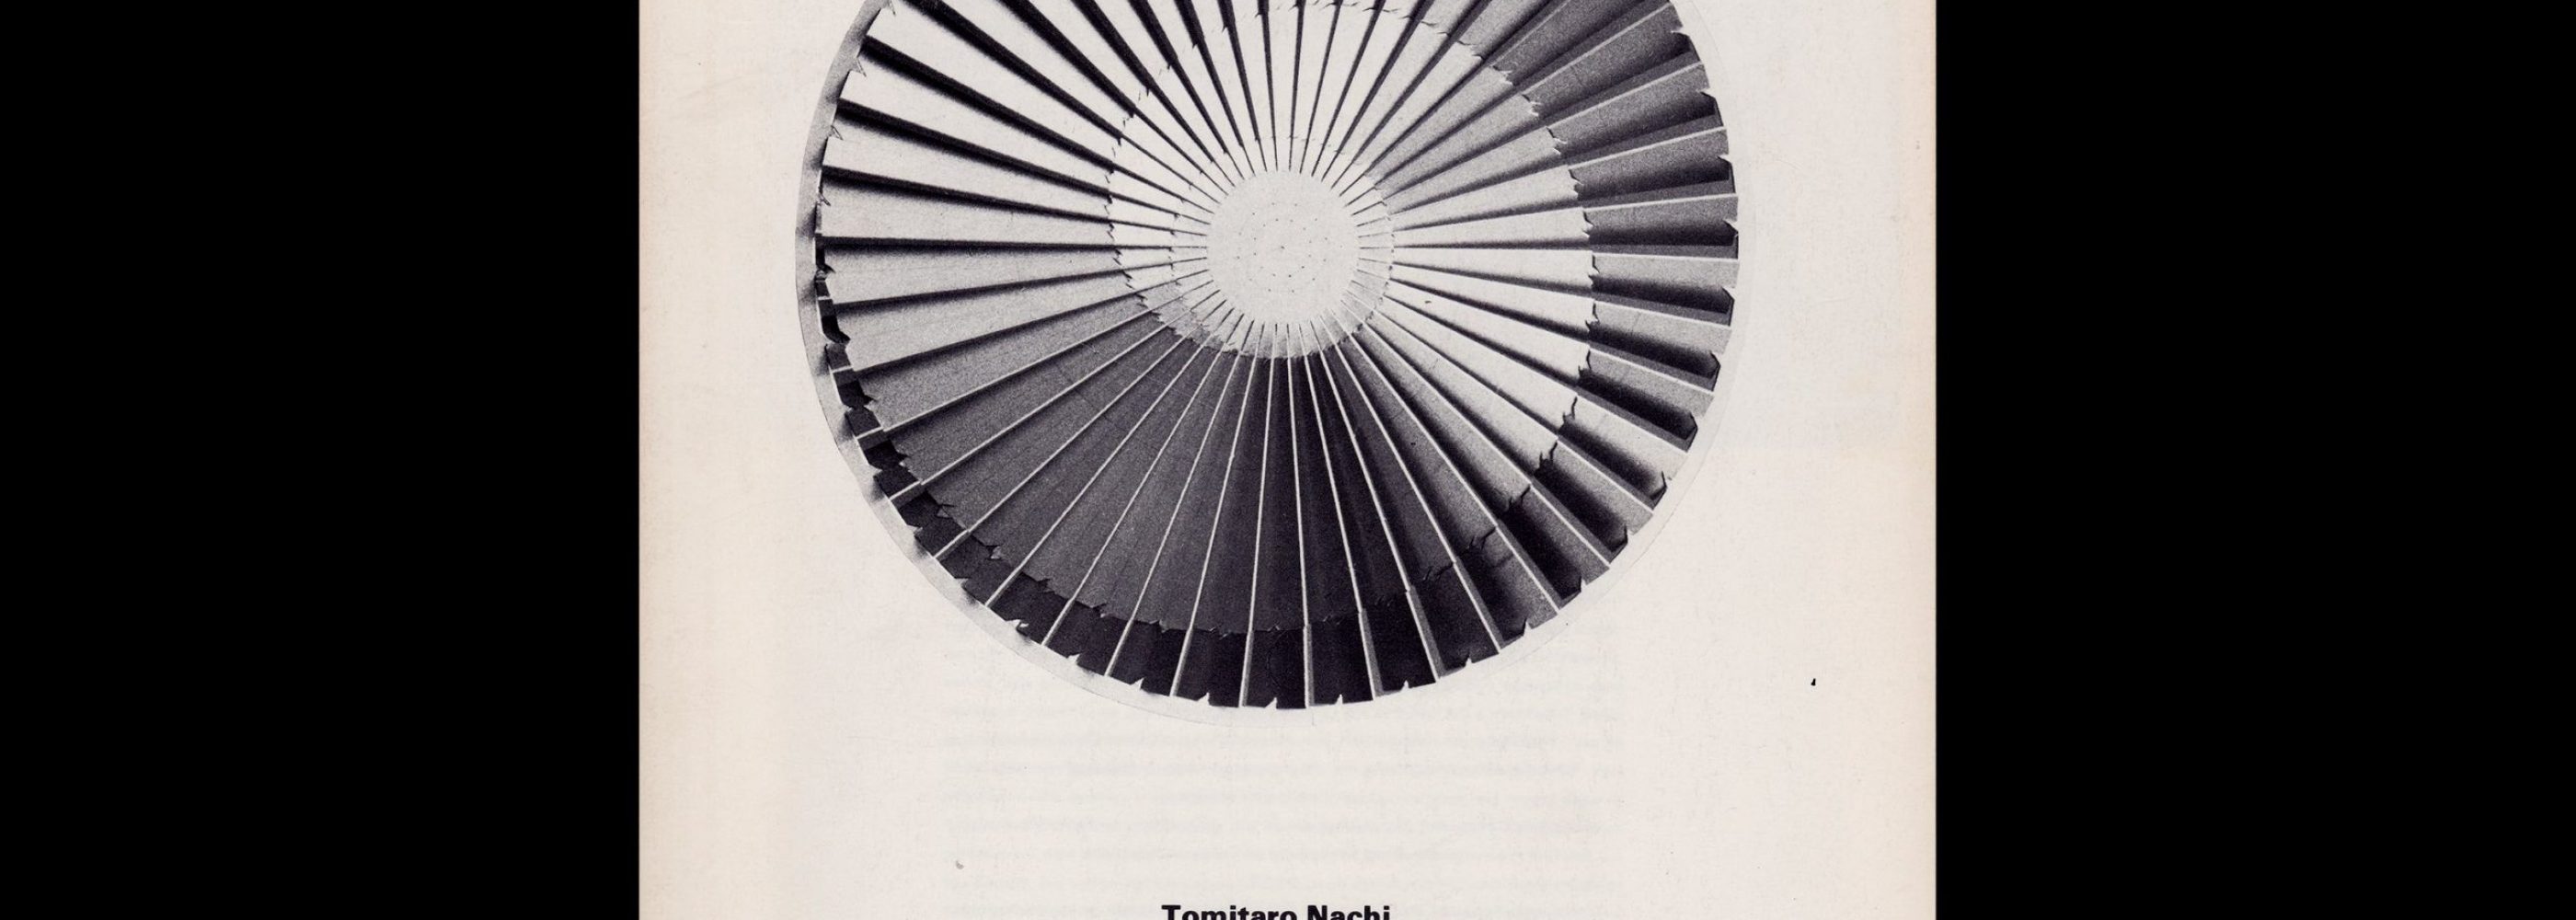 Tomitaro Nachi, Stedelijk Museum, Amsterdam, 1974 designed by Wim Crouwel and Daphne Duijvelshoff (Total Design)